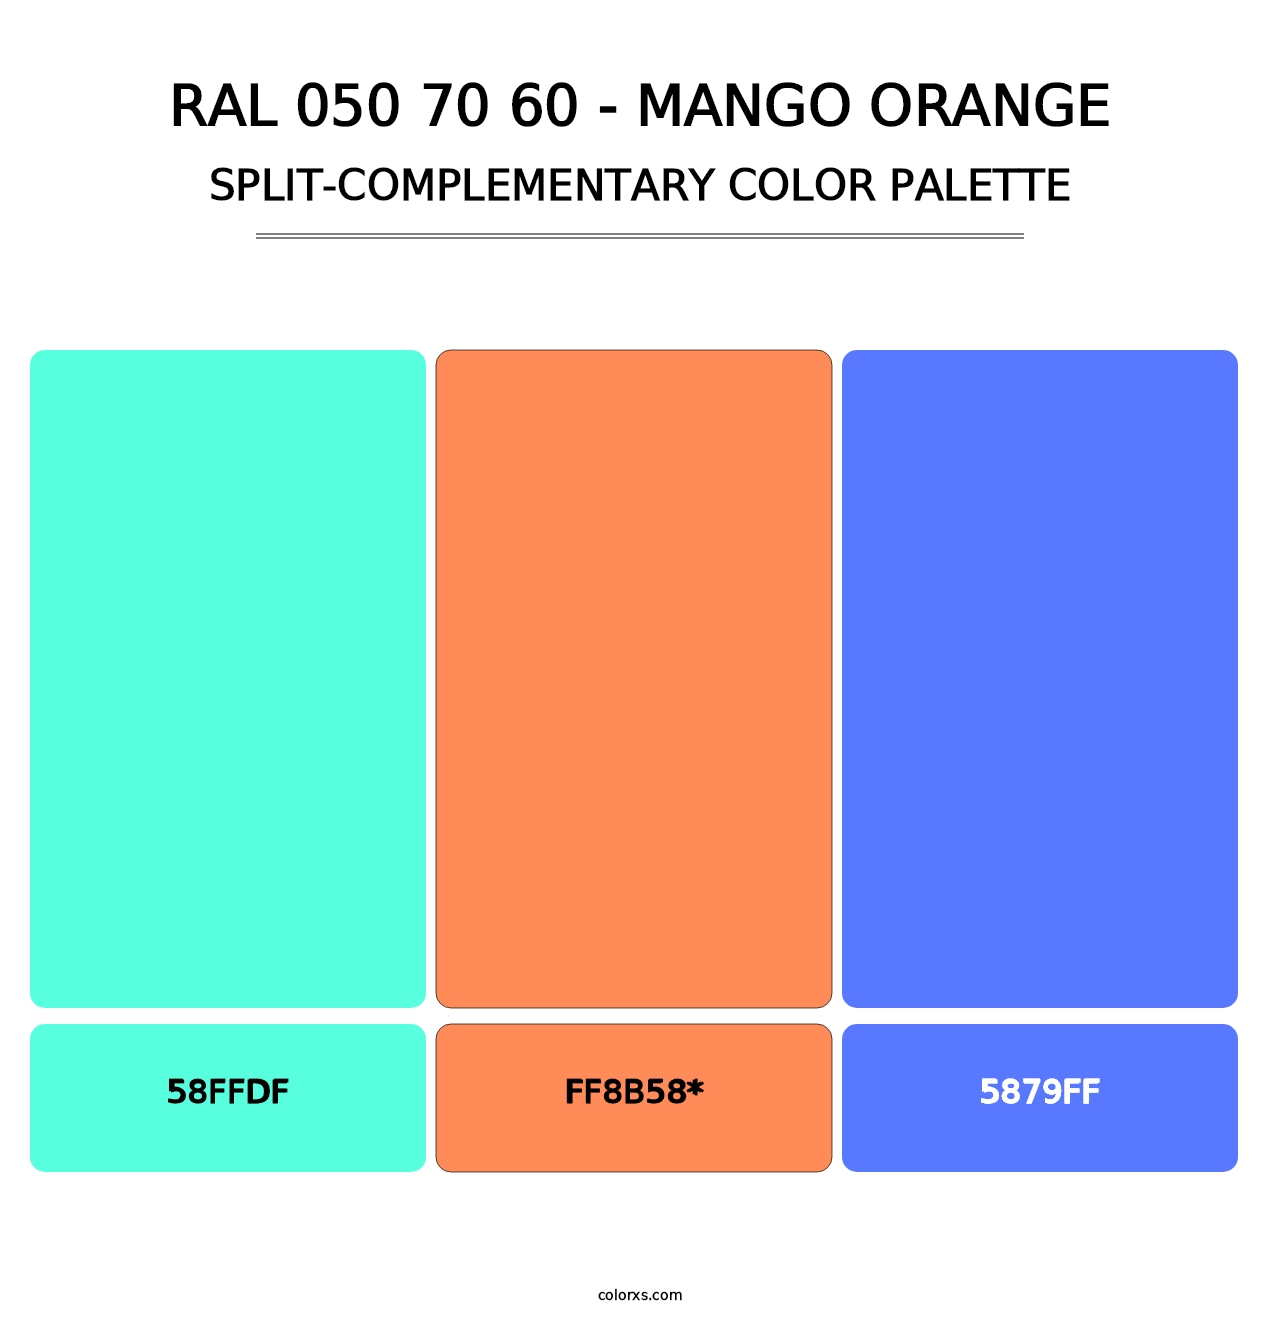 RAL 050 70 60 - Mango Orange - Split-Complementary Color Palette